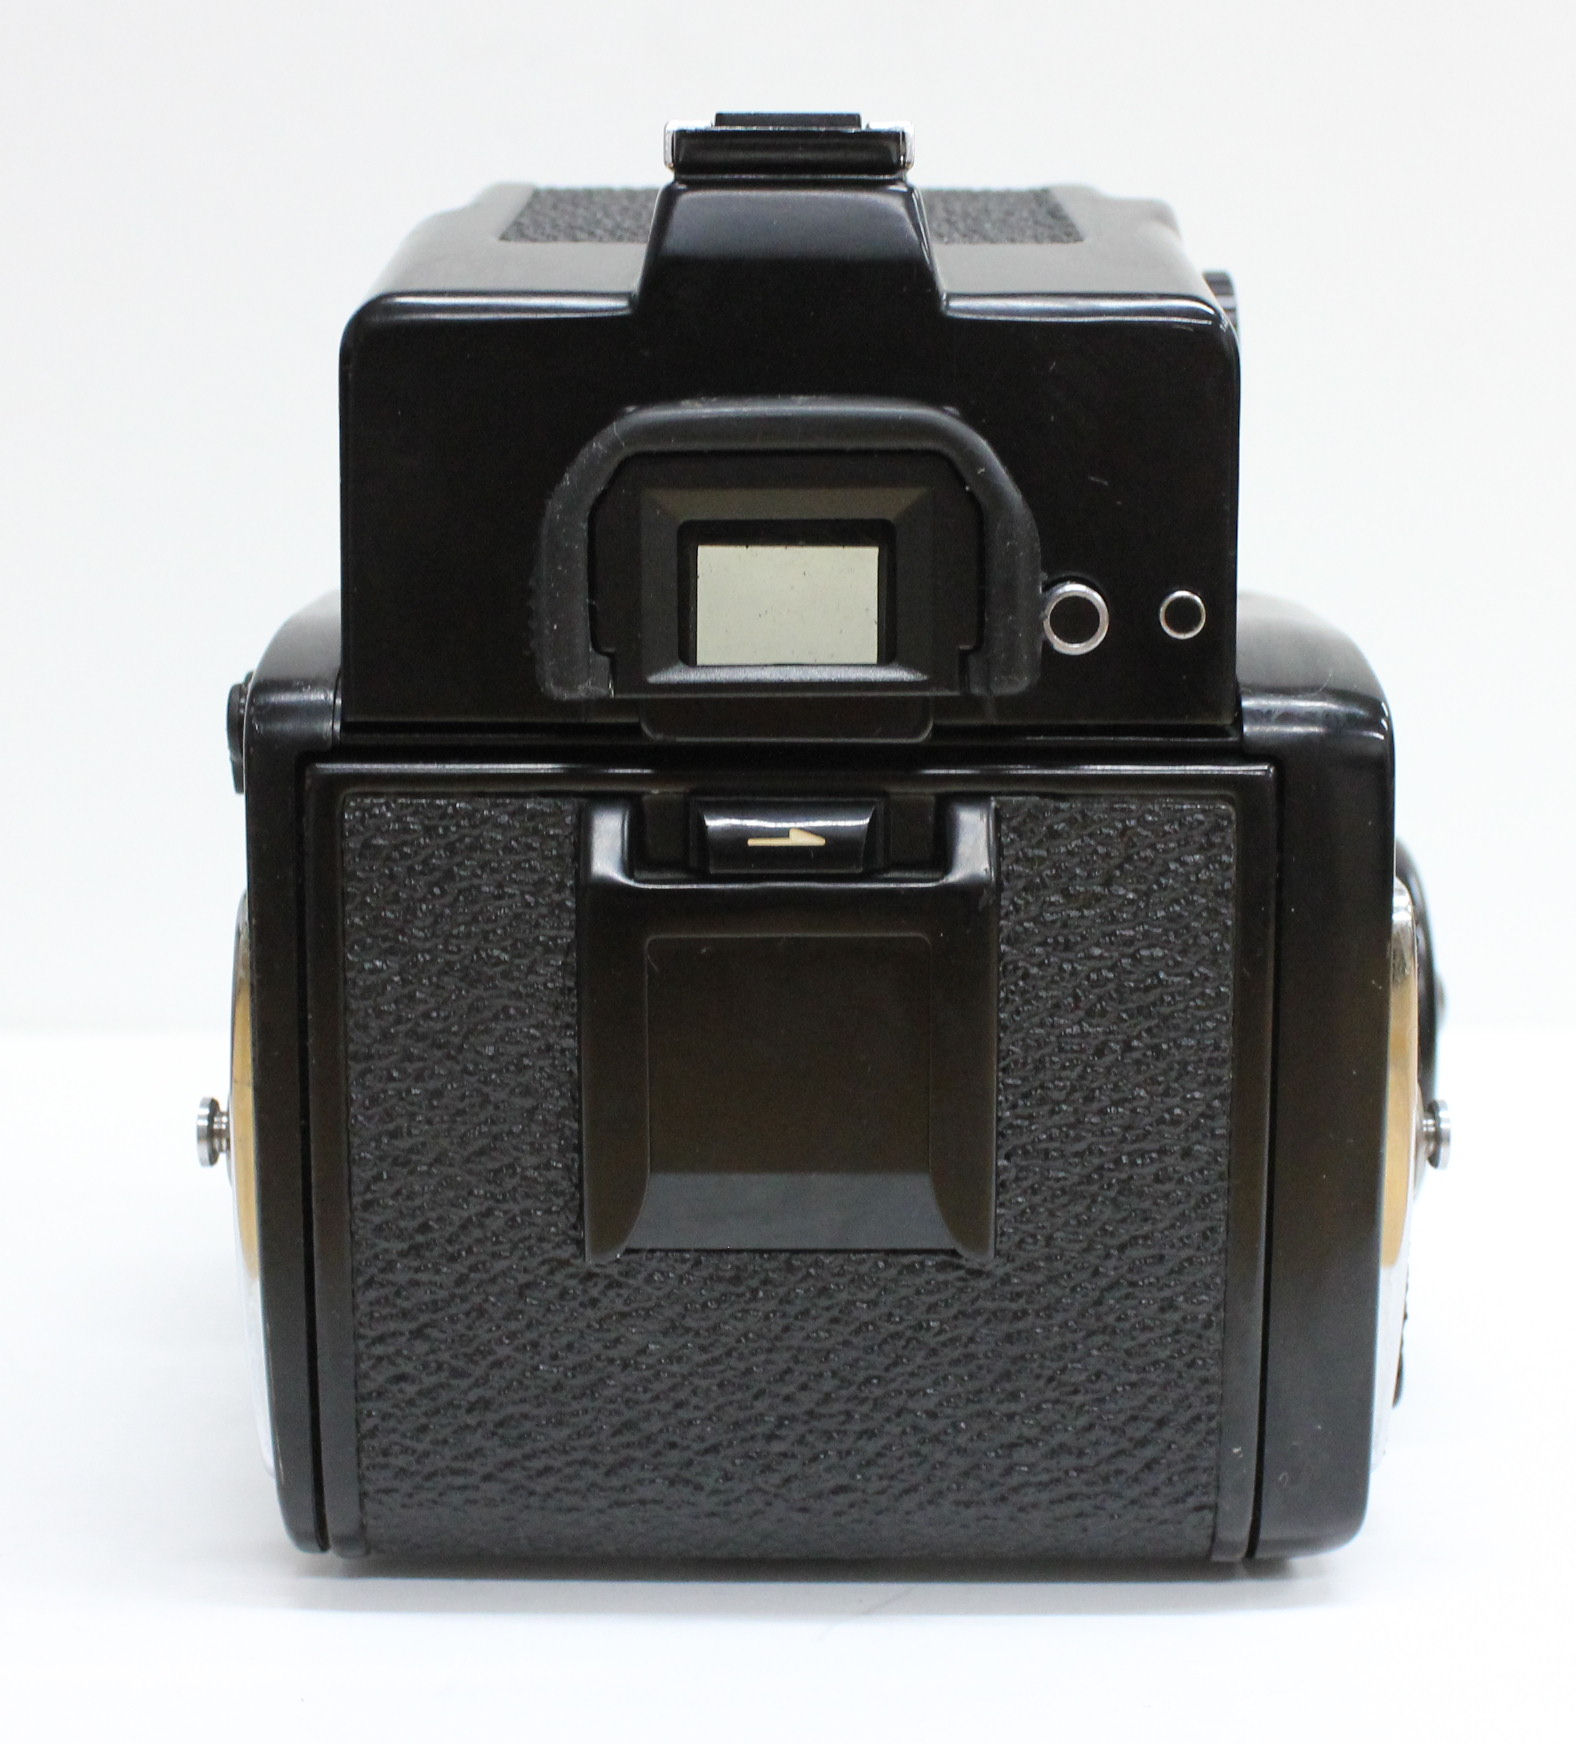  Mamiya M645 1000S Medium Format Film Camera Body from Japan Photo 3